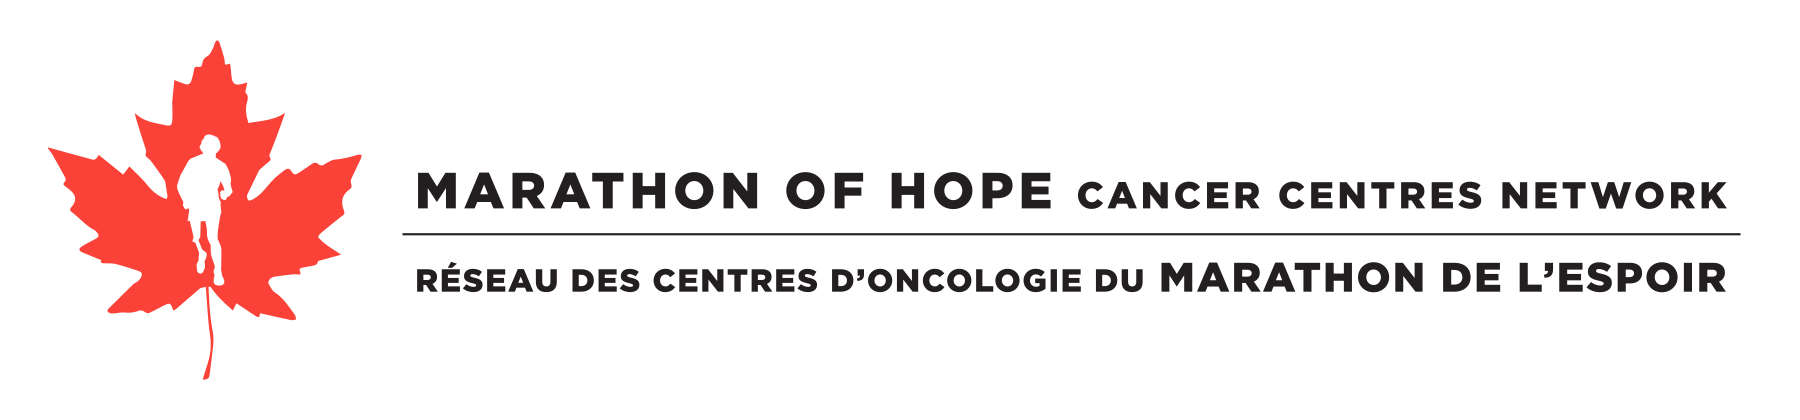 Marathon of Hope Cancer Centres Network Logos